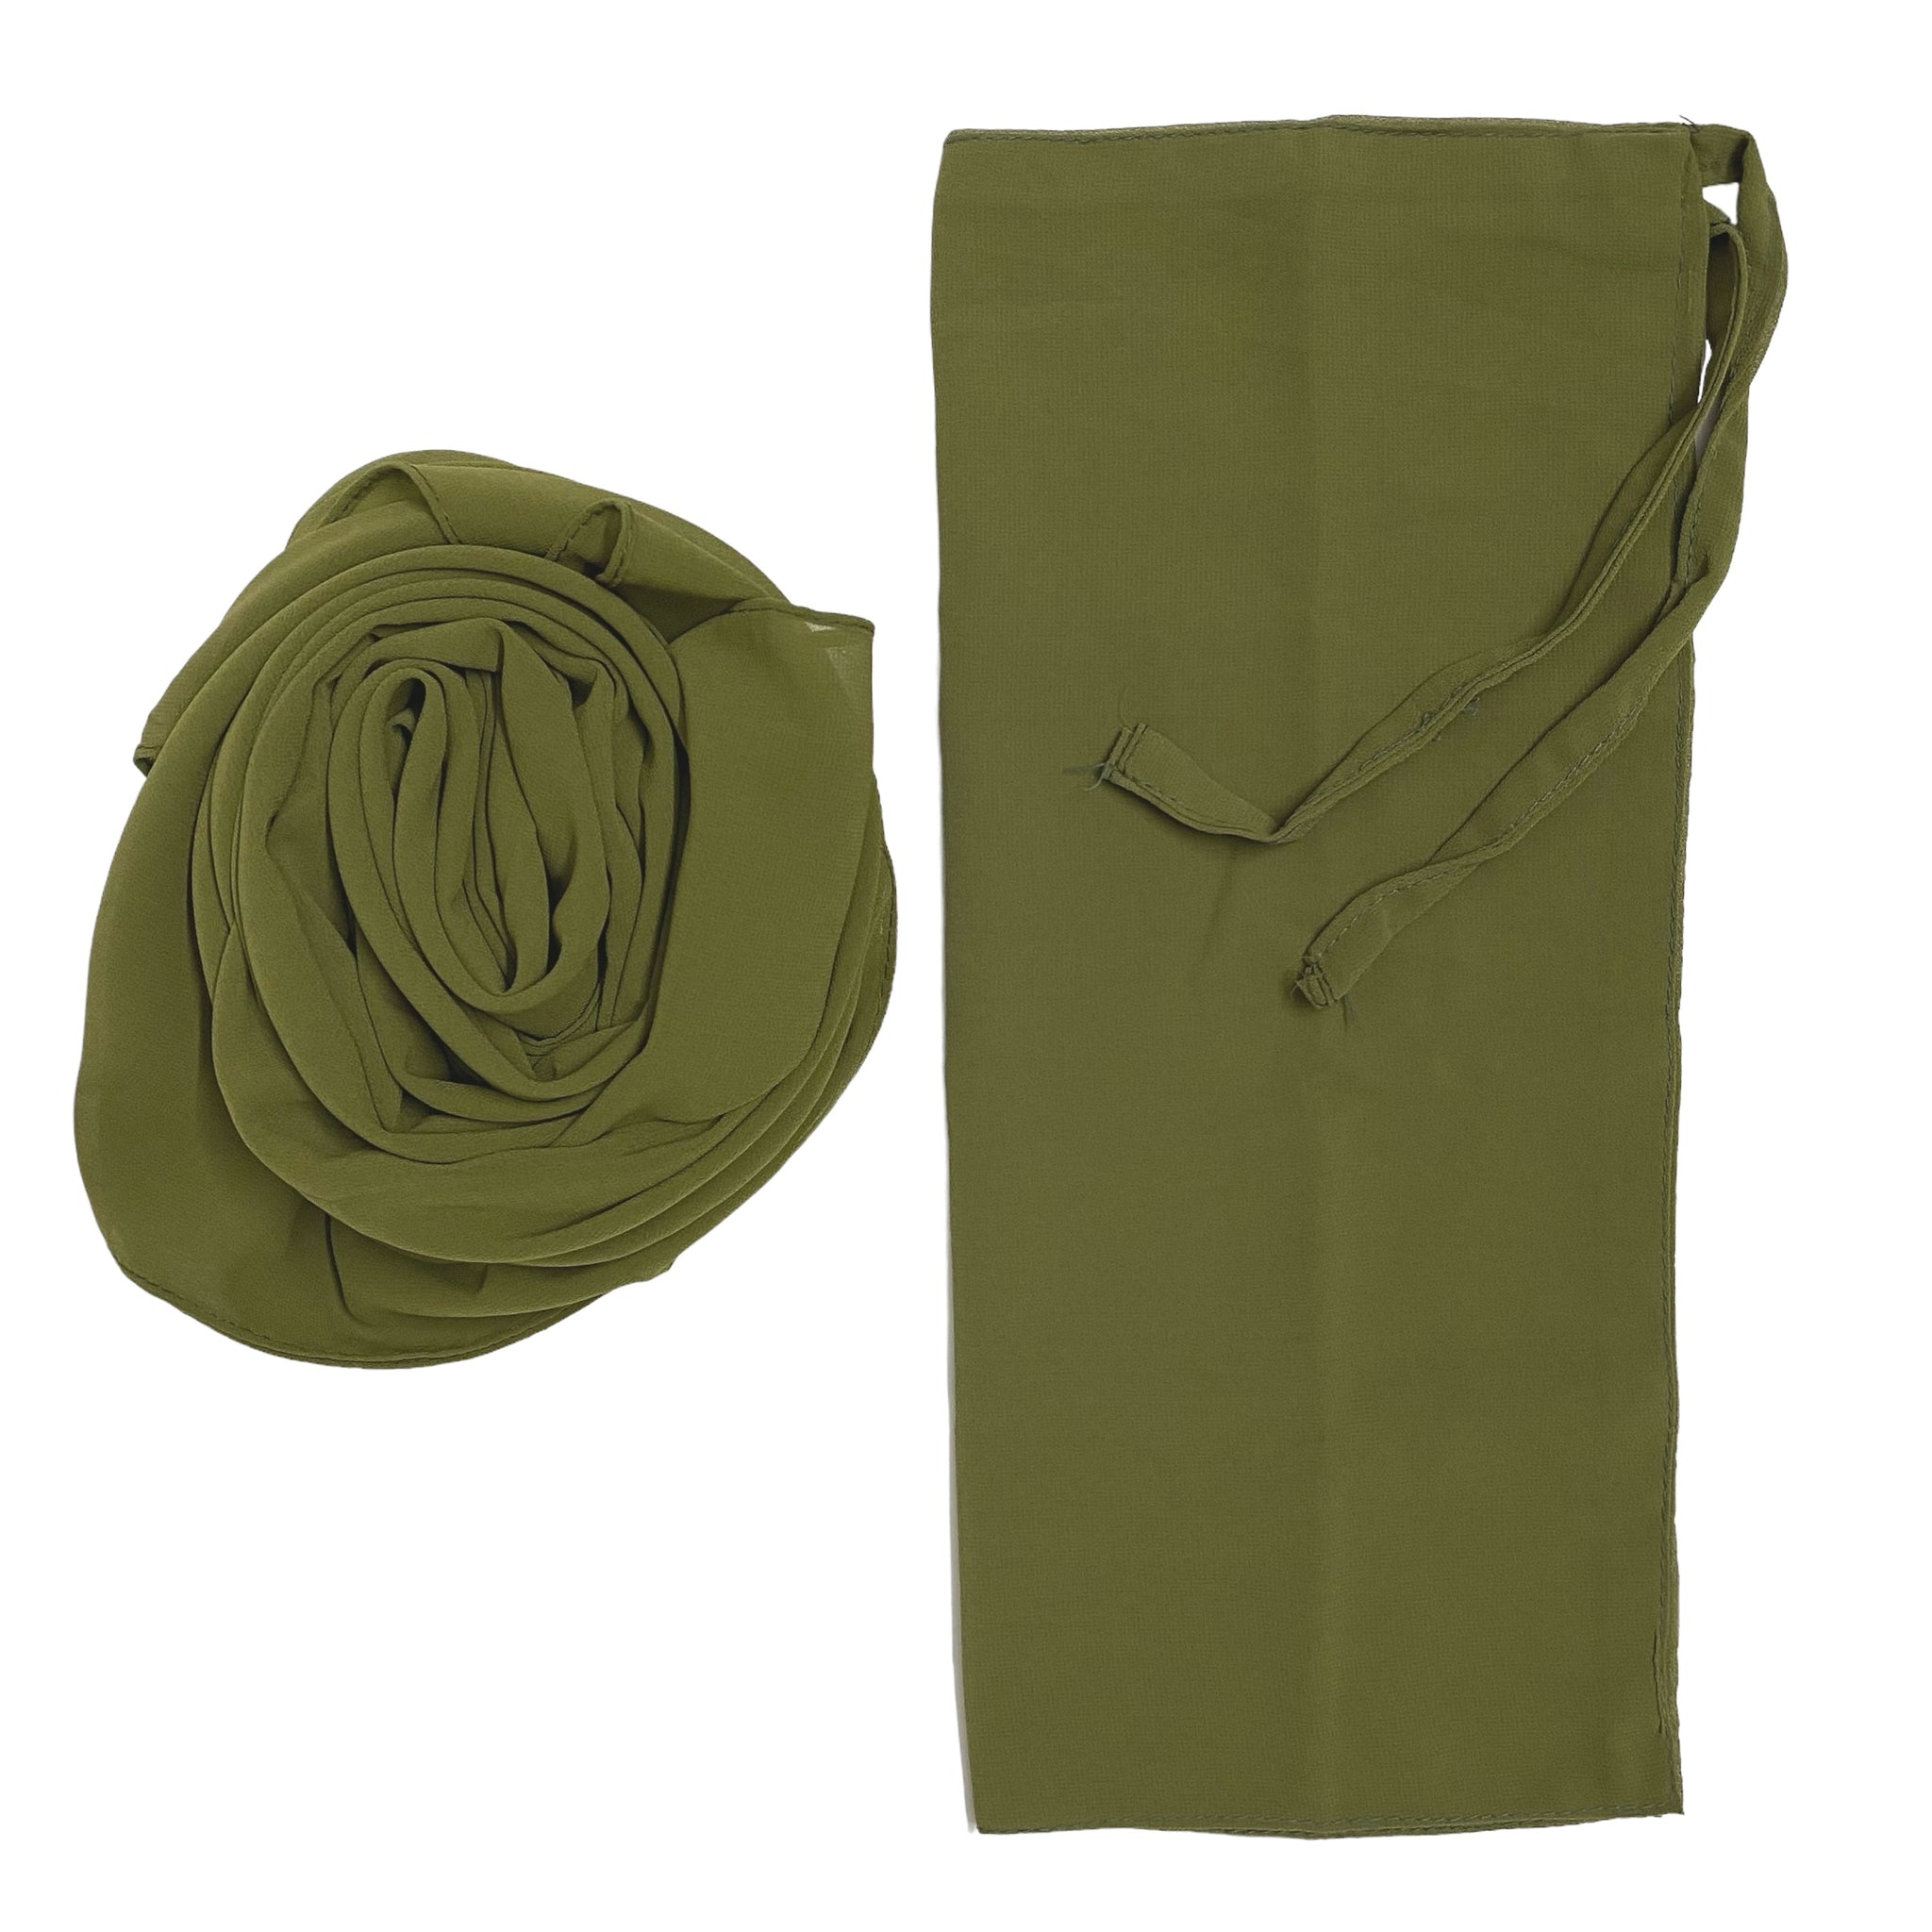 Matching Hijab & Niqab Sets - Olive